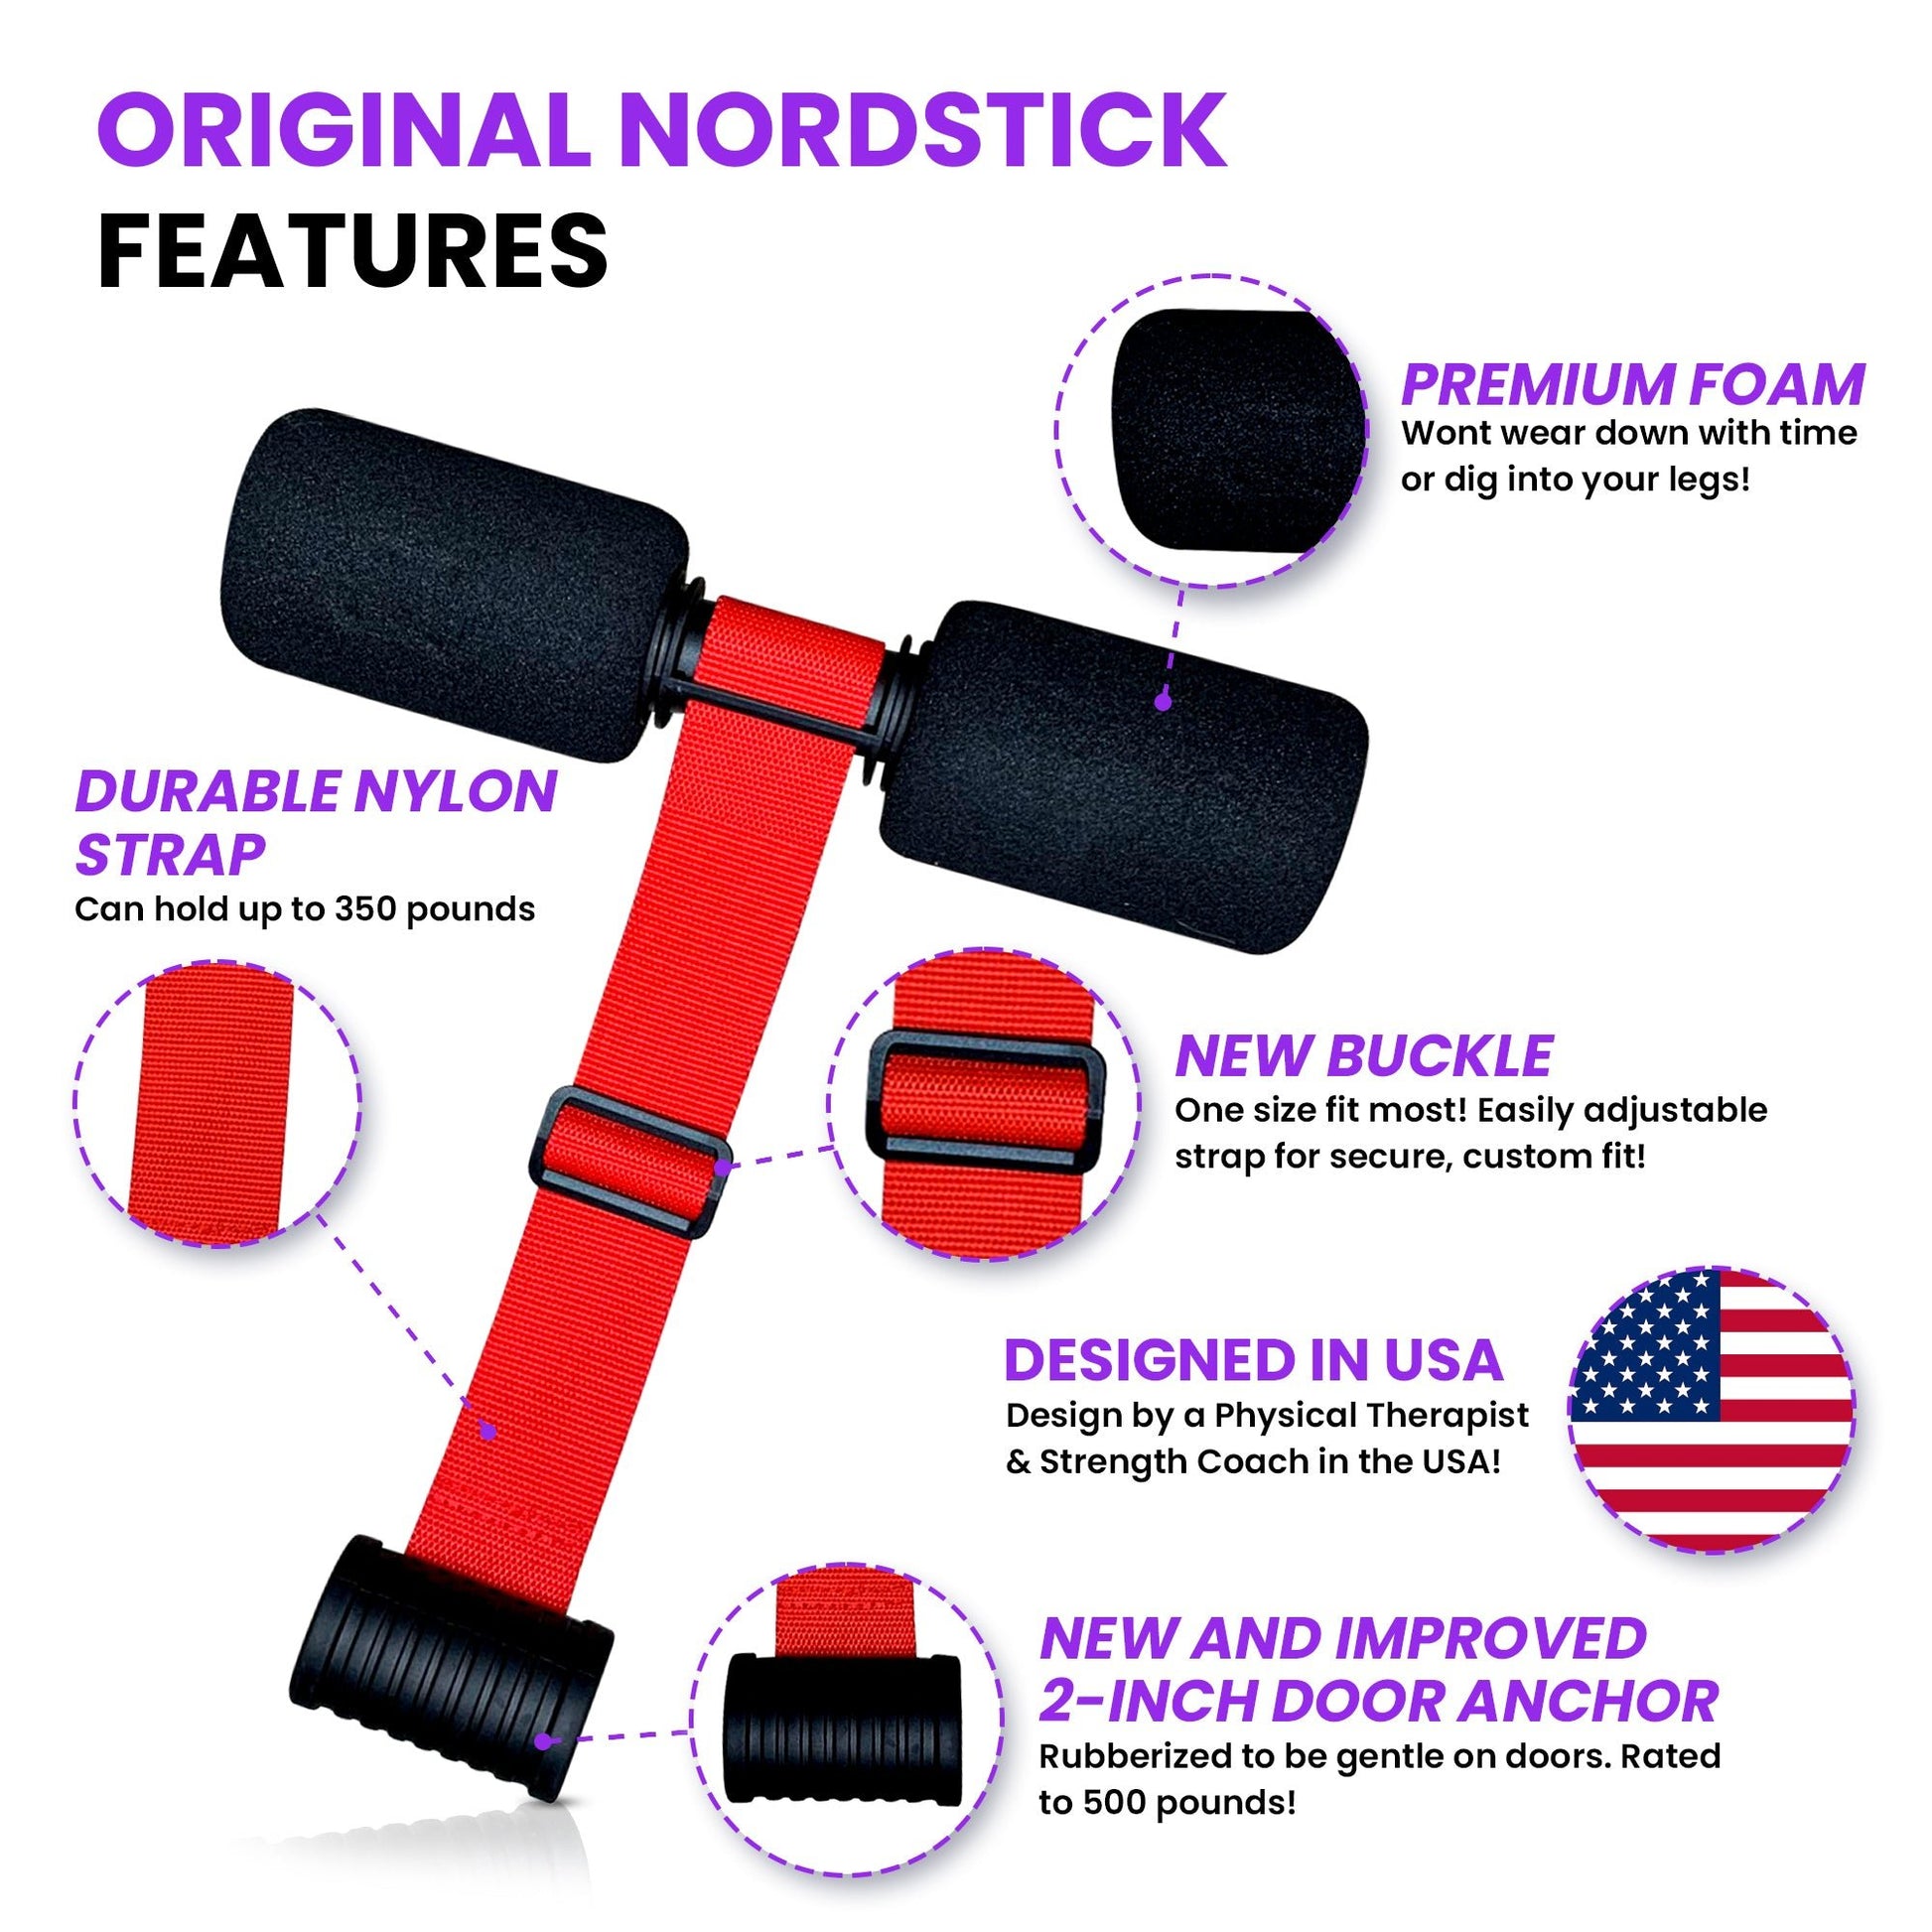 Nordstick Limited Editions - The Nordstick